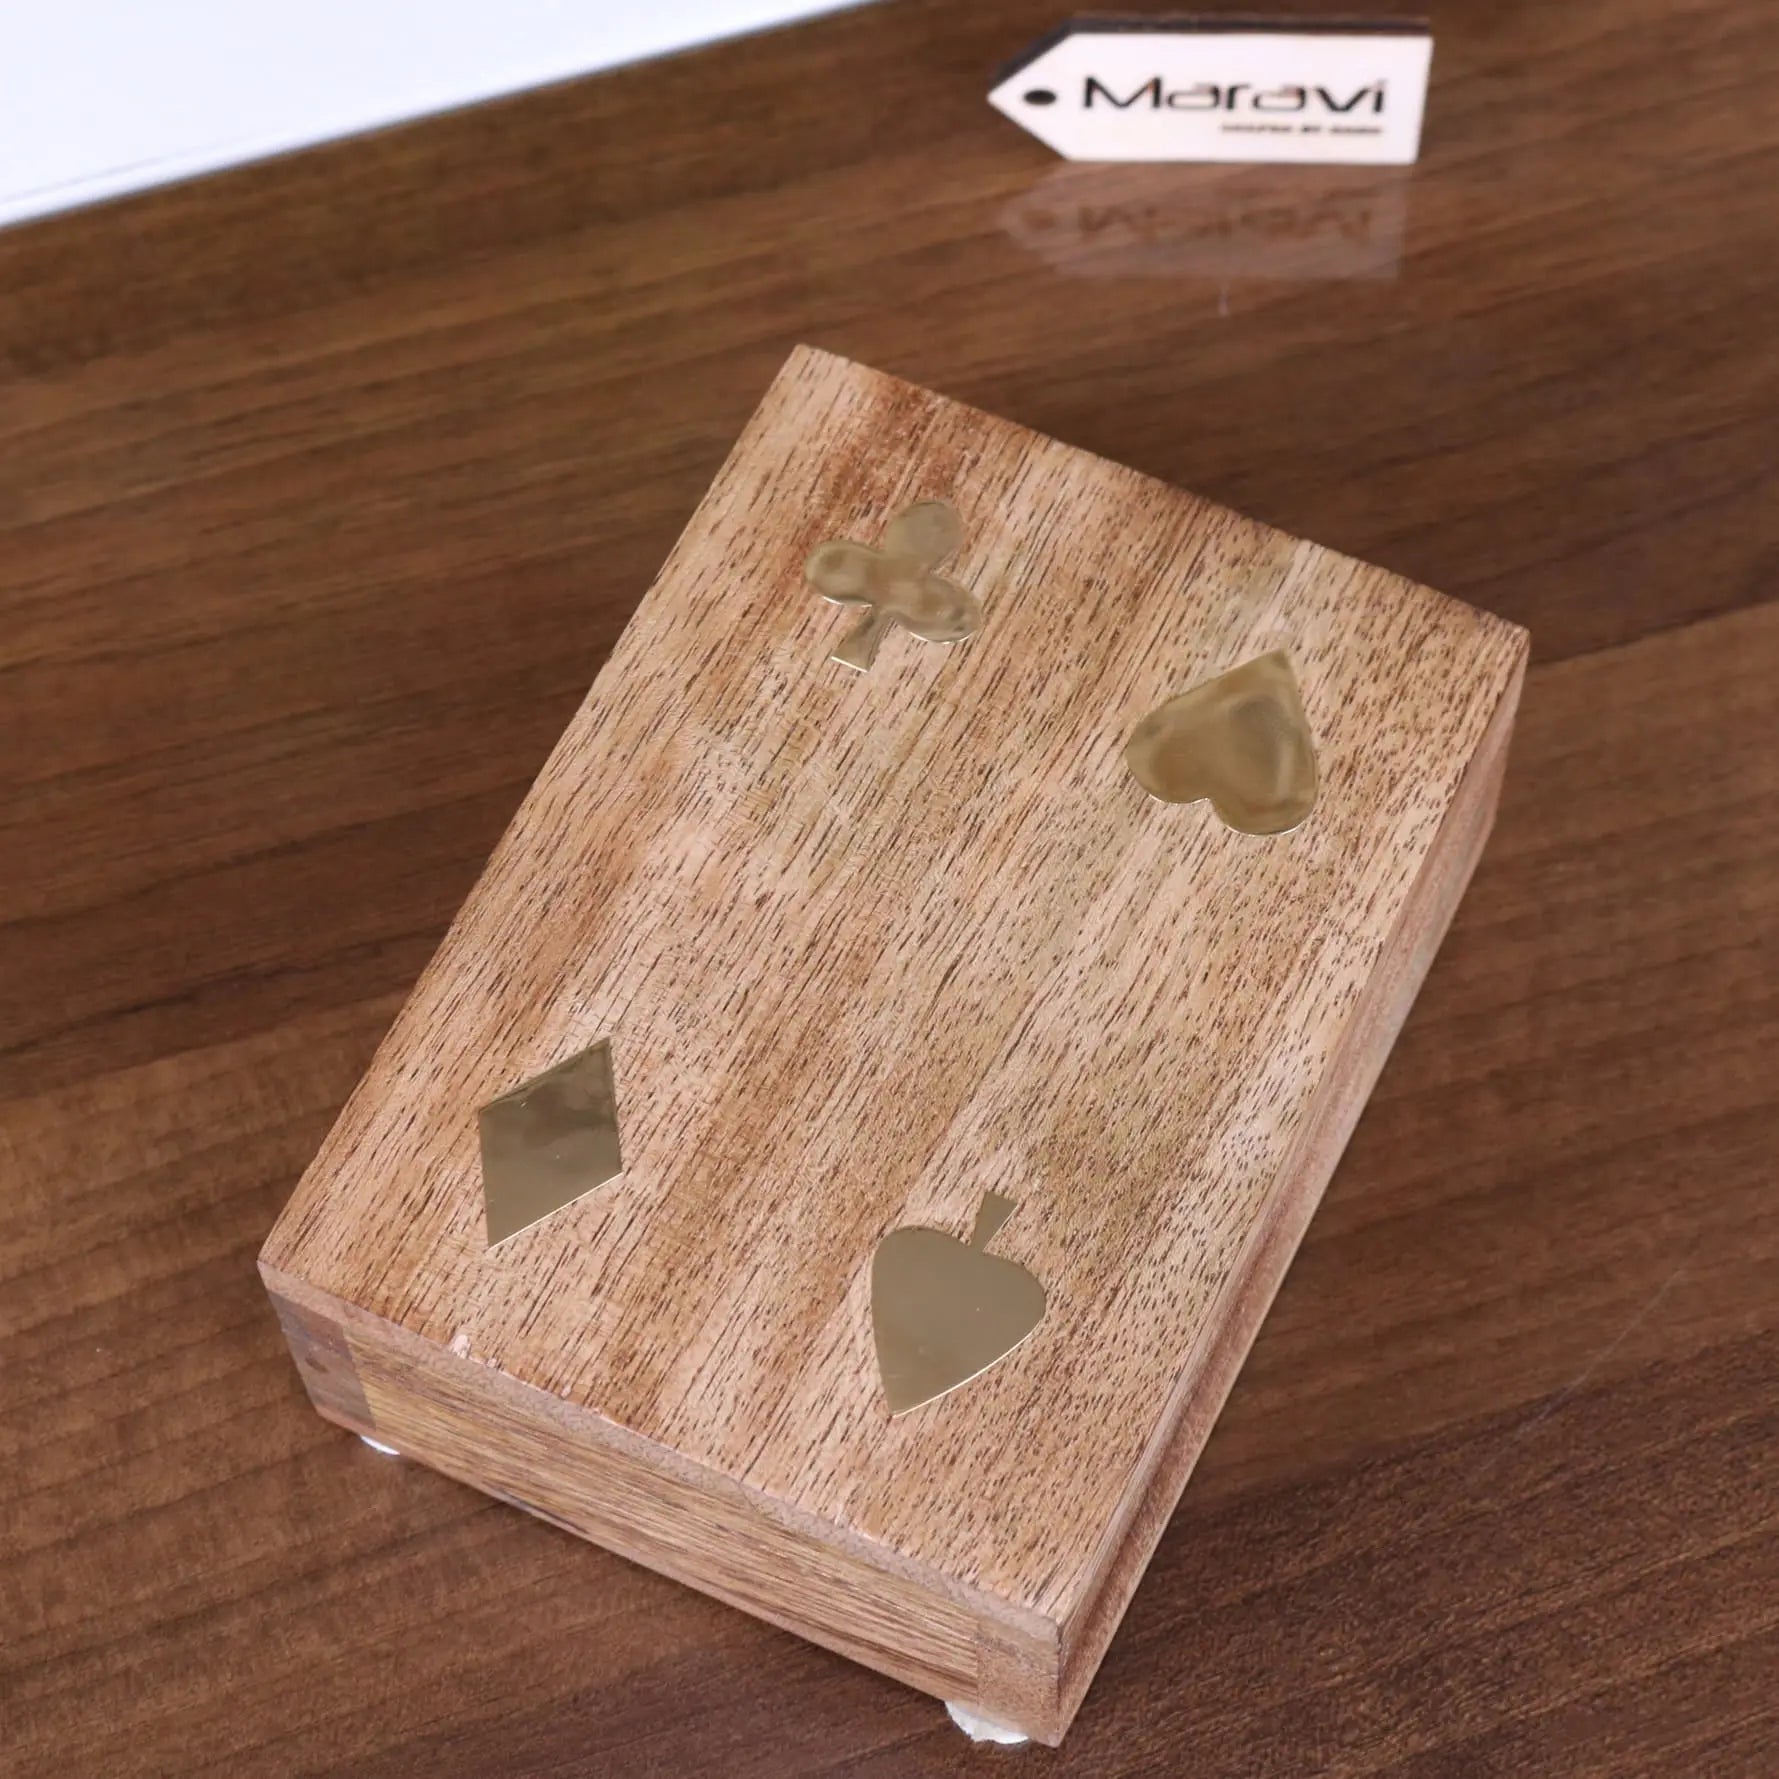 Mahe Wooden Playing Card Box - Top View